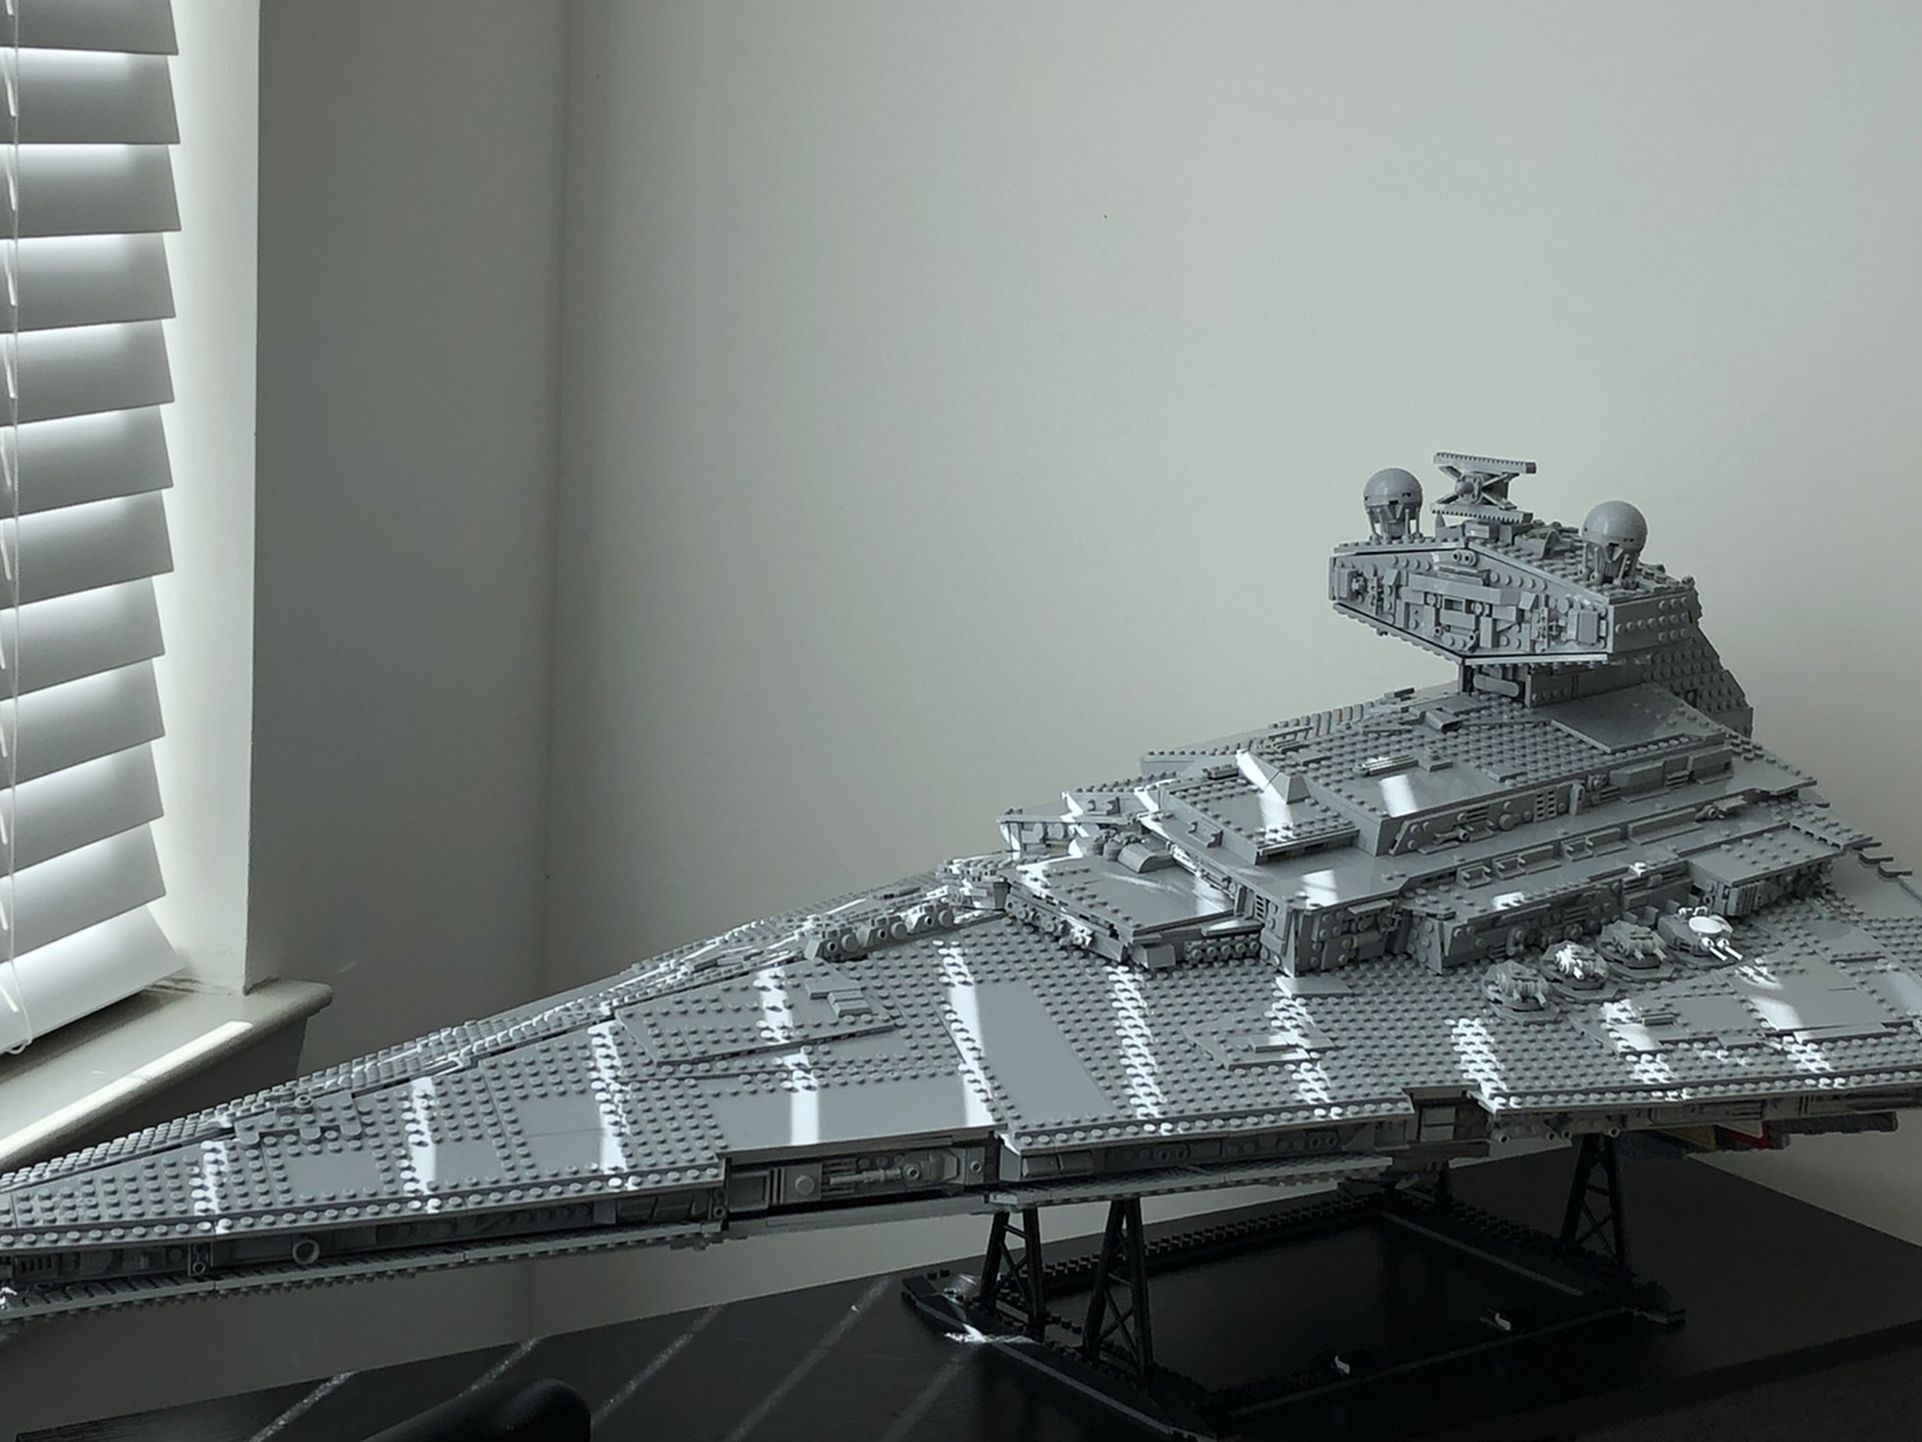 UCS Death Star II And UCS Star Destroyer Building Blocks (replicas)